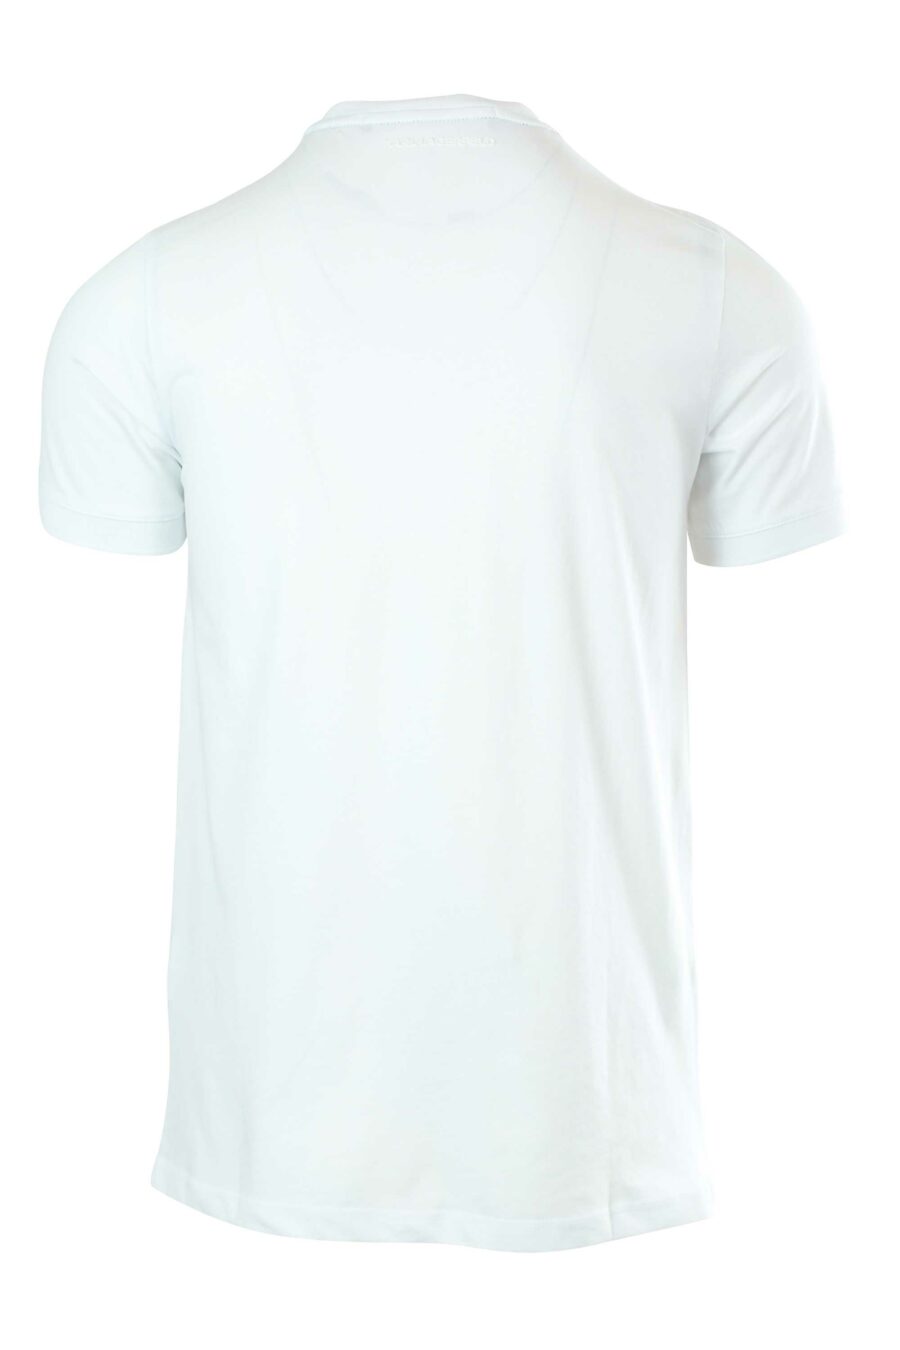 Camiseta blanca con logo negro pequeño - 4062226282444 2